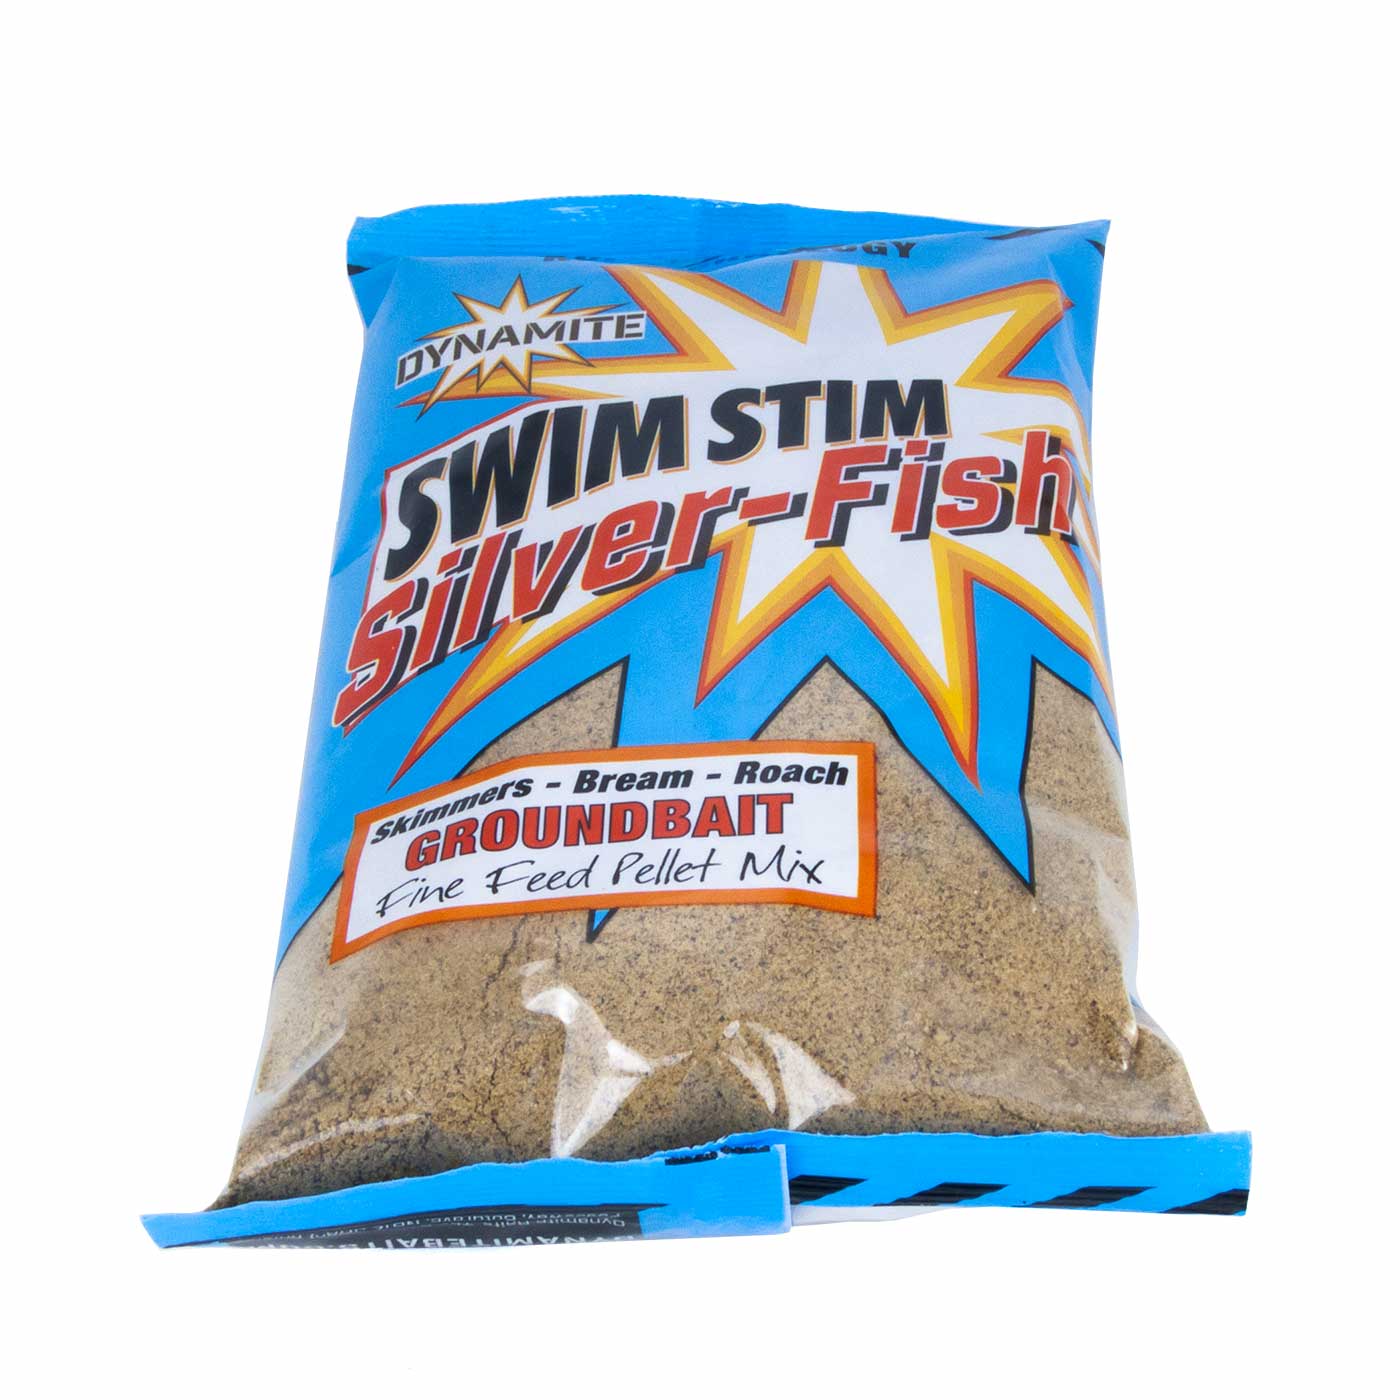 Swim Stim Silver-Fish Groundbait hell